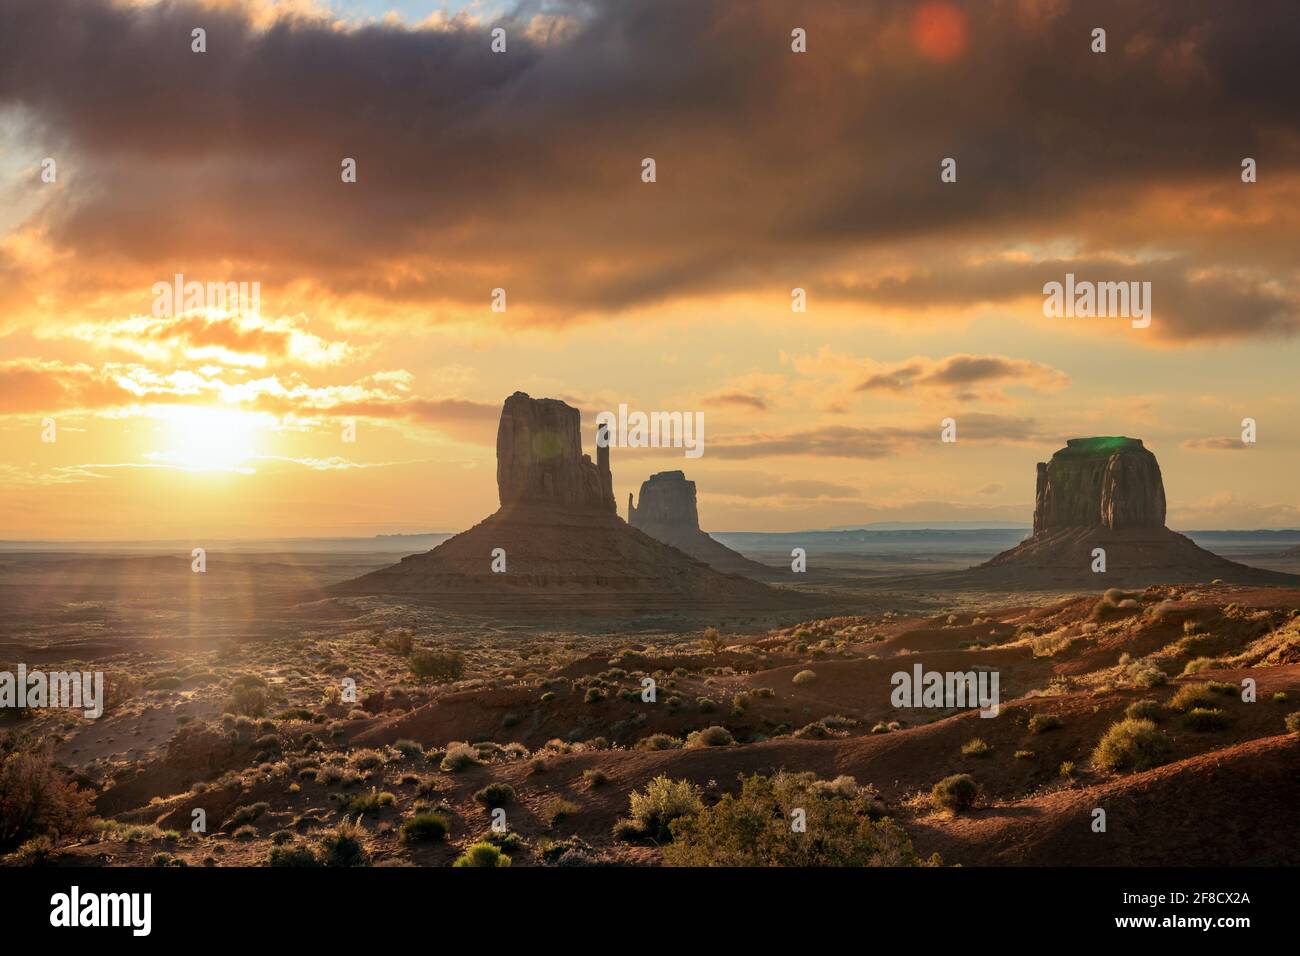 Monument valley landscape, cloudy sky at sunset sunrise. Navajo tribal park, United states of America, Utah, Arizona desert. Stock Photo